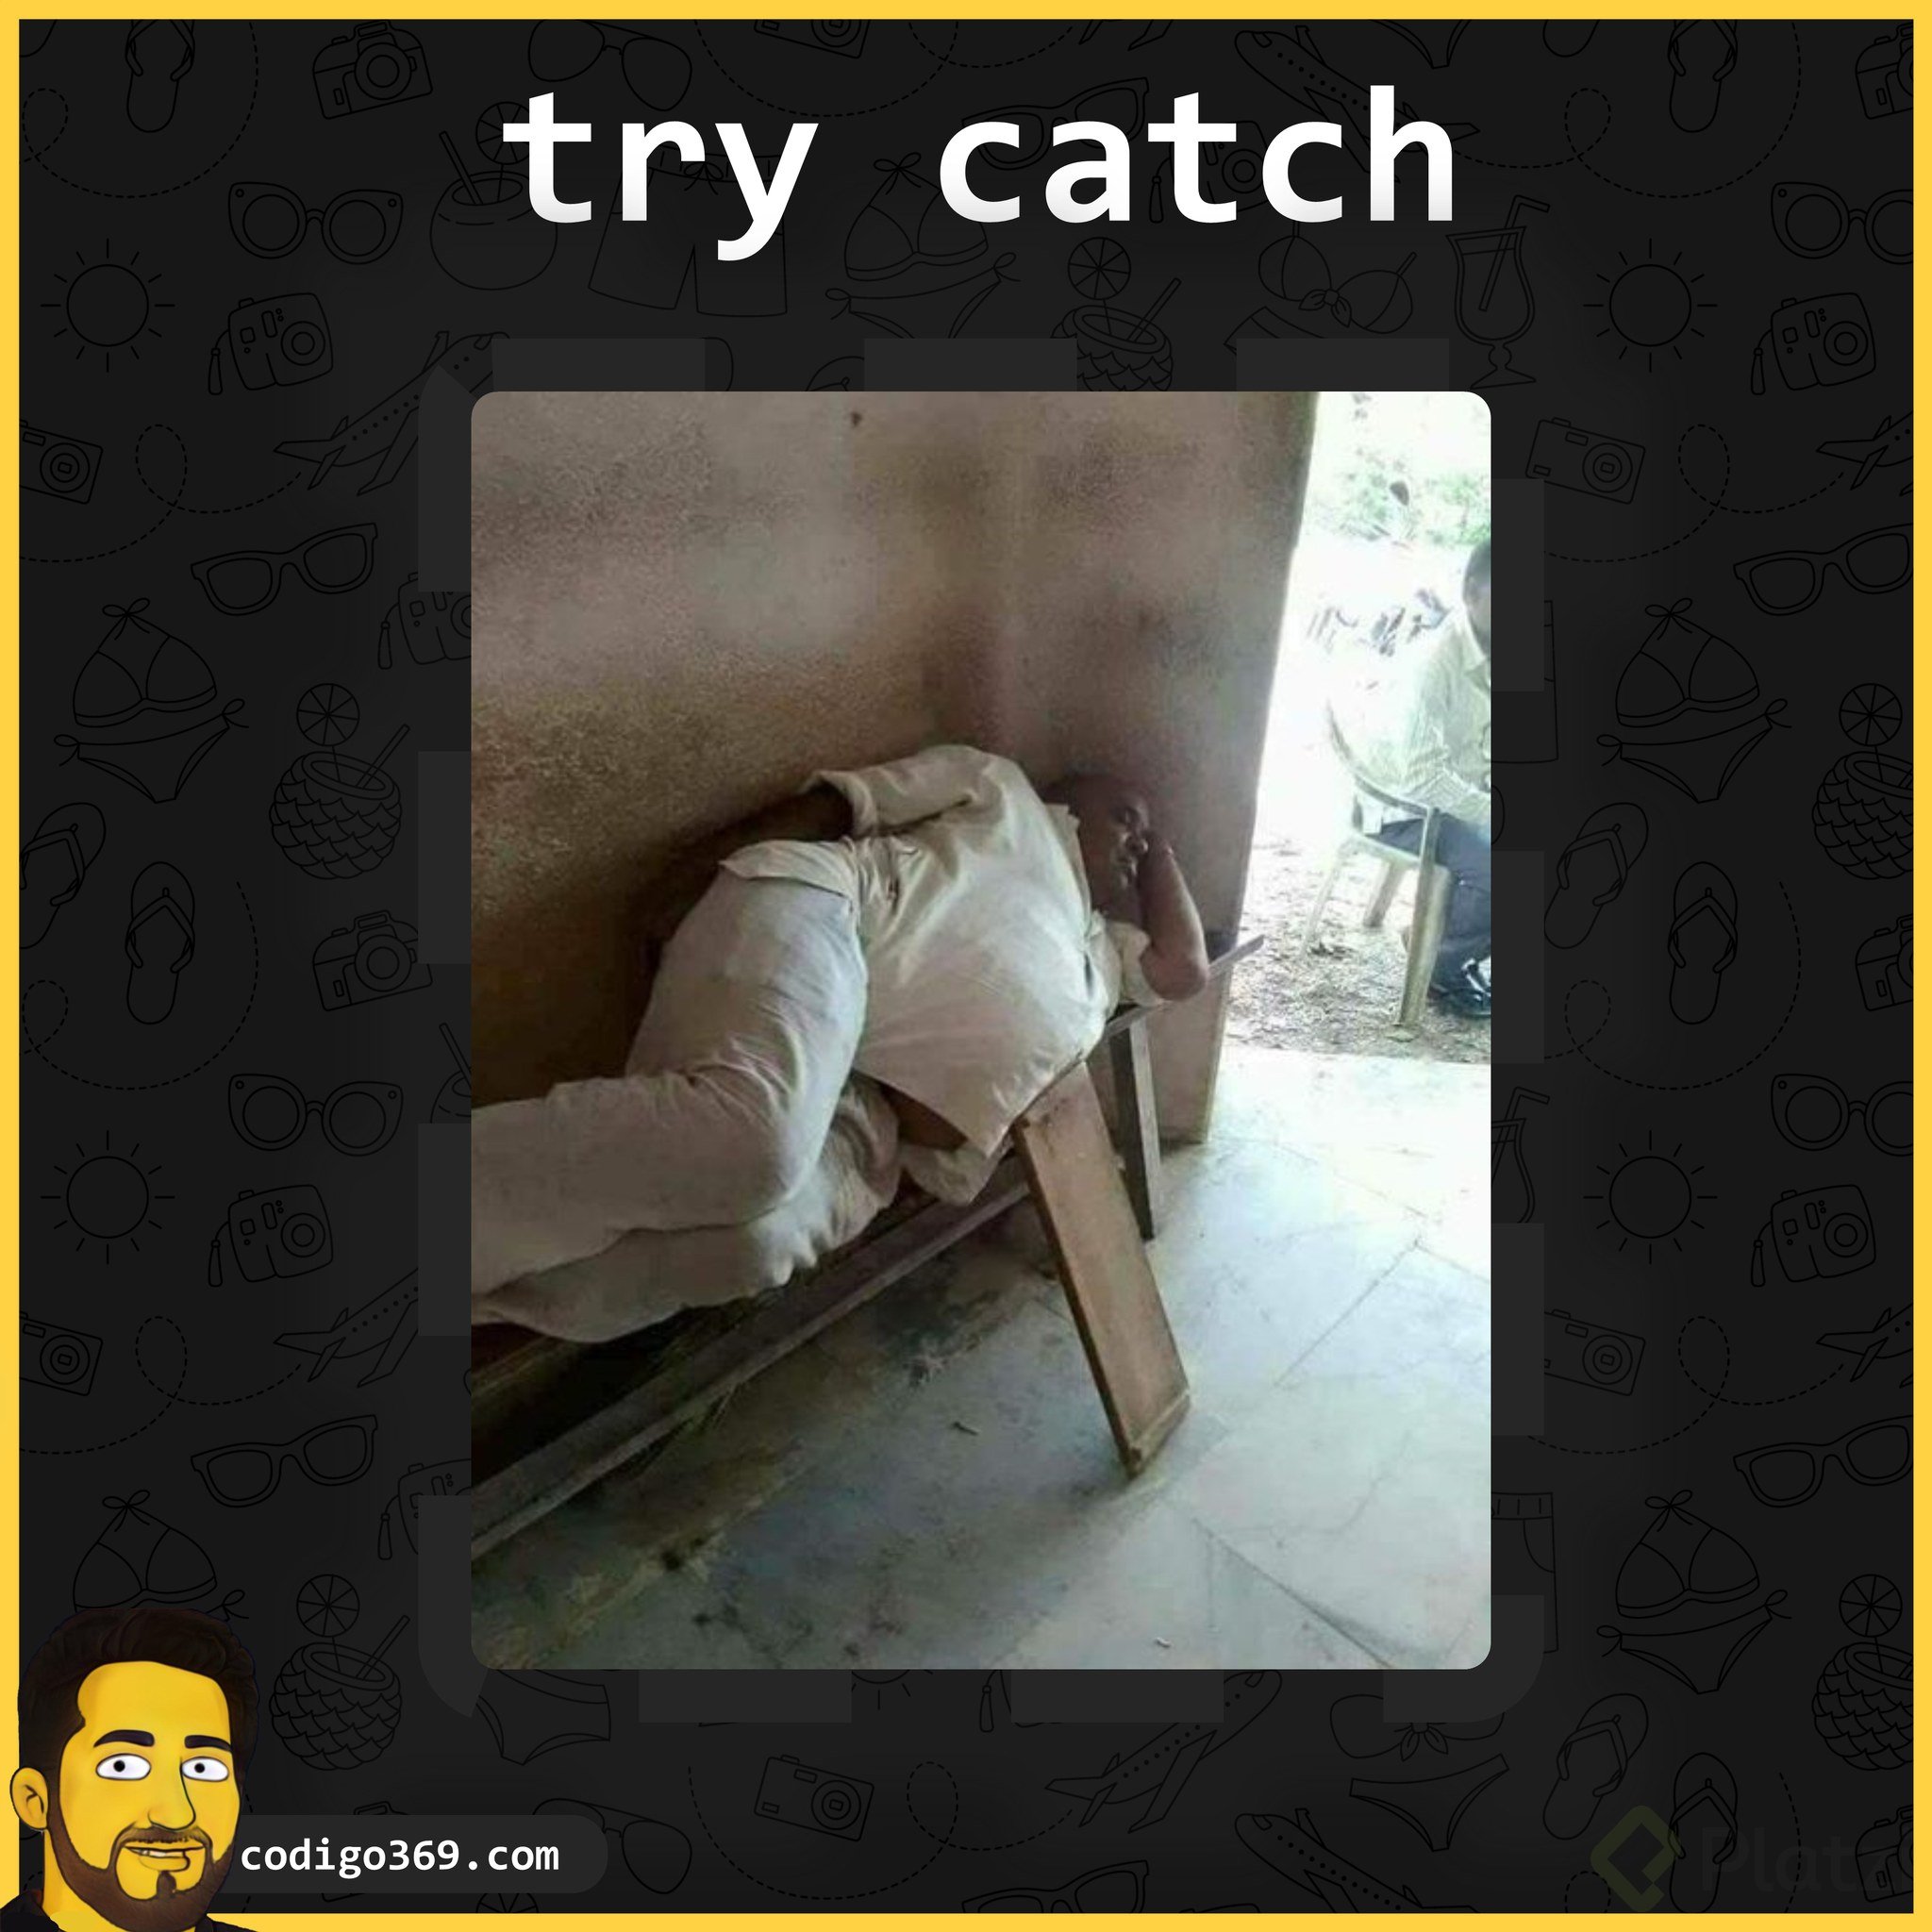 TryCatch.jpg